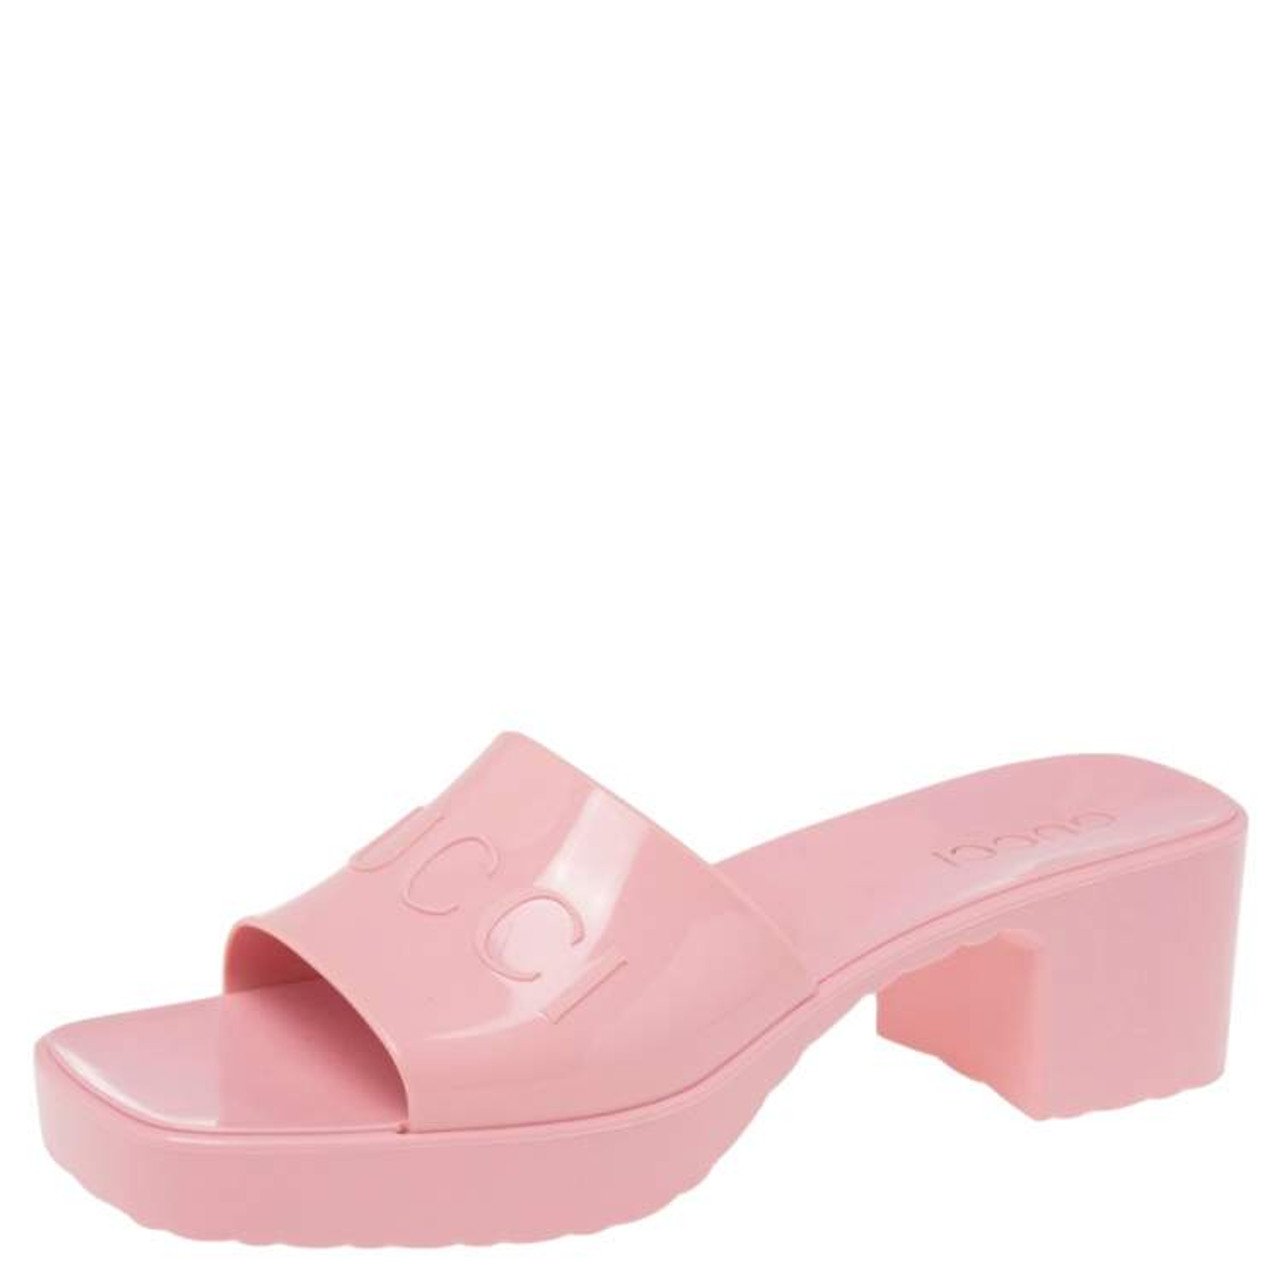 Gucci Fur Princetown Slippers River Clogs Slide Shoes Sandals Mules 42 |  eBay